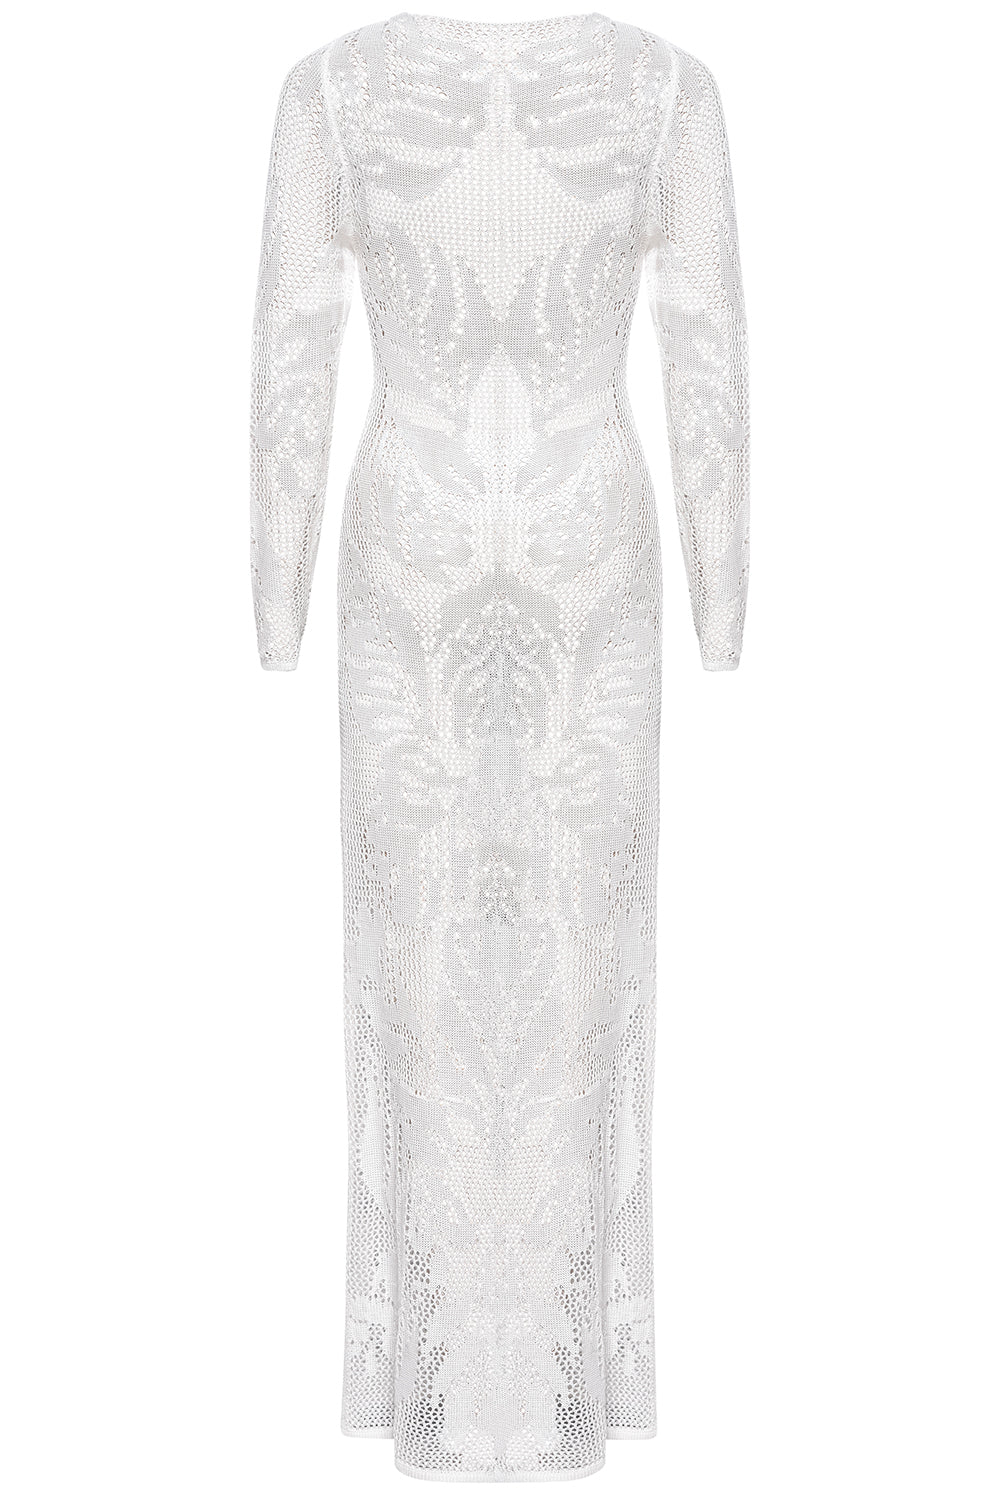 Cancun Crochet White Dress on white background back view.